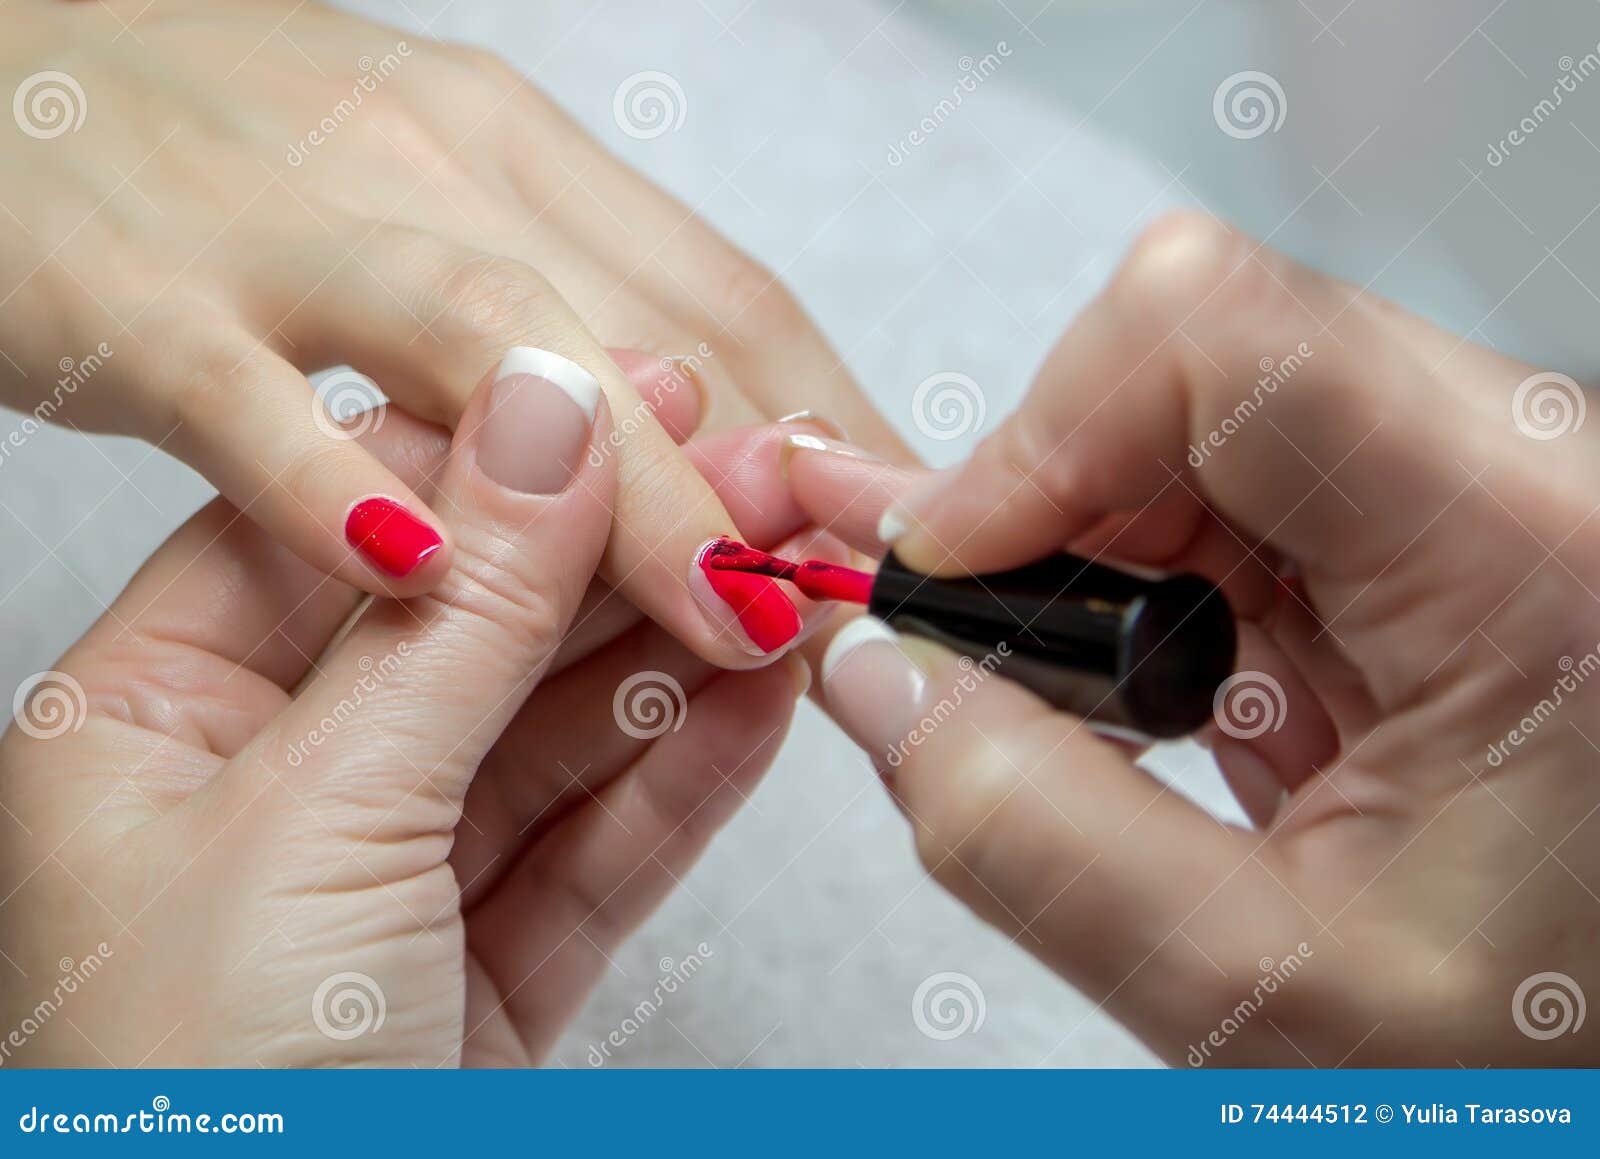 Woman receiving toenail pedicure service by pedicurist at nail salon.  Beautician coating red gel color toenail to customer at nail and spa salon.  Foot care and toenail treatment at nail salon. 7773681